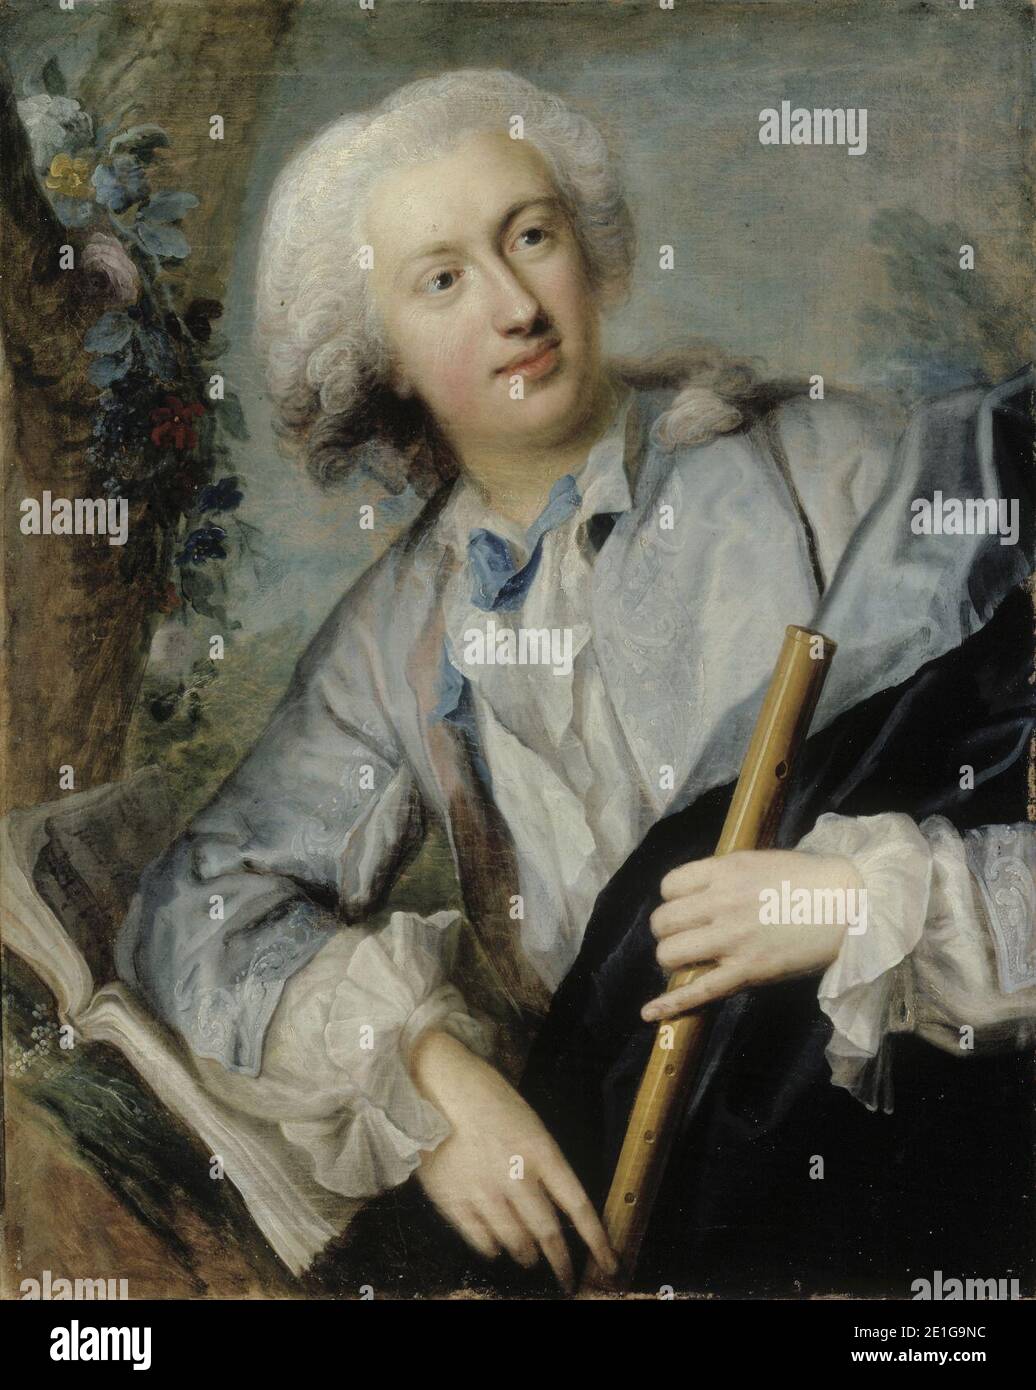 Lorens Pasch, The Elder - vanhempi - den äldre (1702−1766)- Flûte Player - Huilunsoittaja - Flöjtspelare (29433099636). Banque D'Images